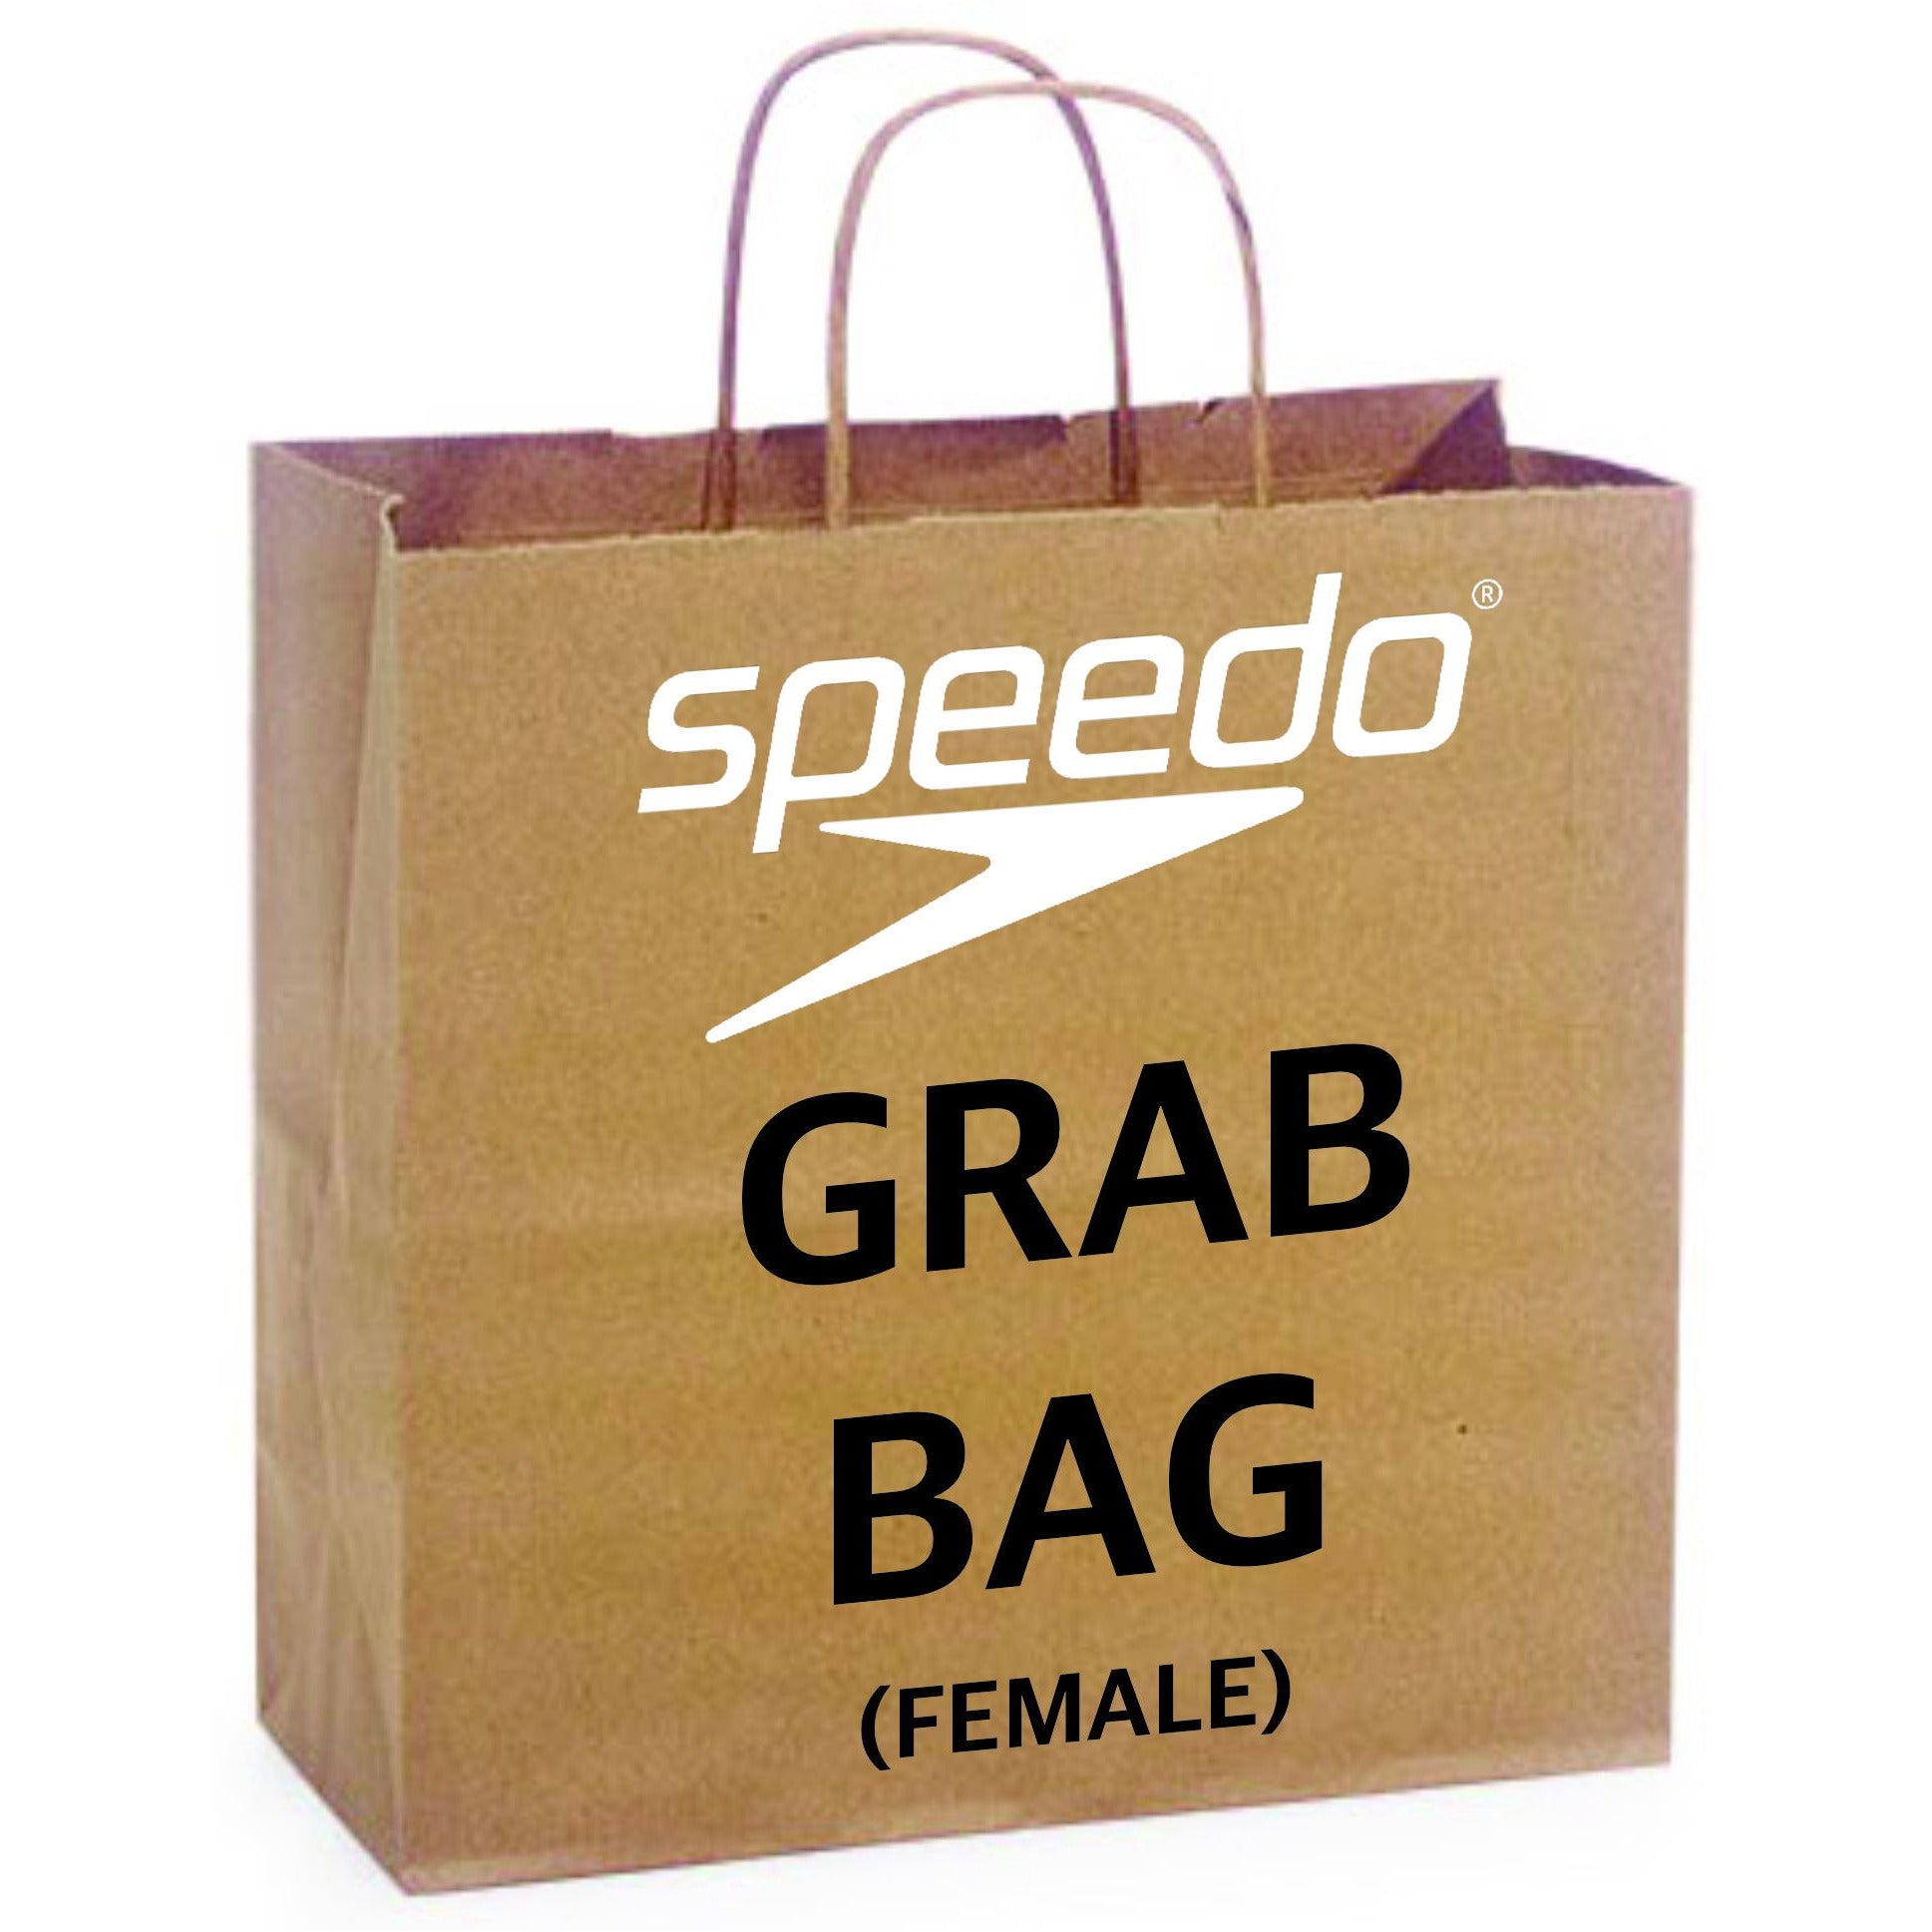 Speedo Grab Bag Female Swimsuit